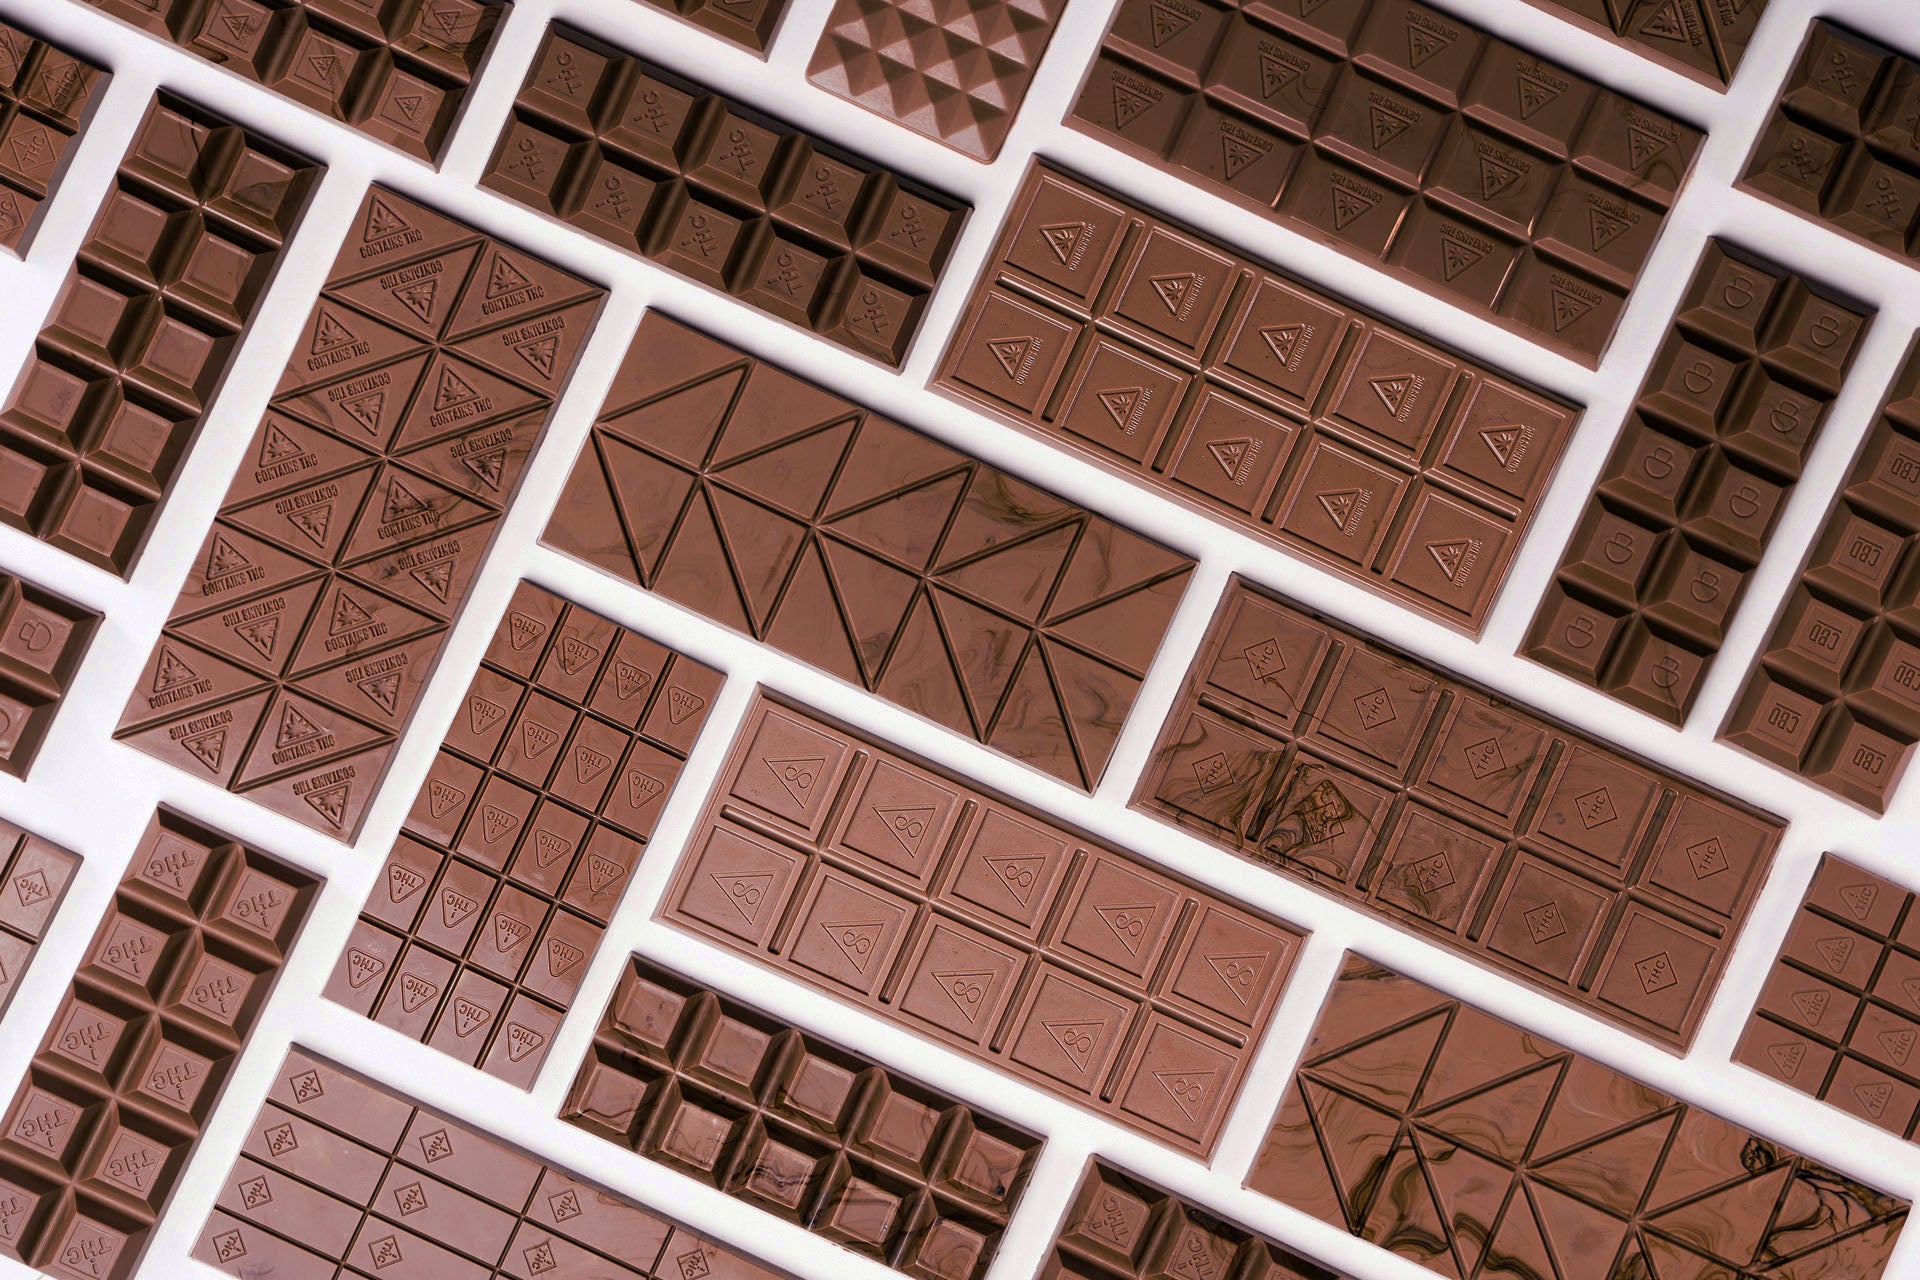 Customize chocolate mold - personalized custom silicone mold